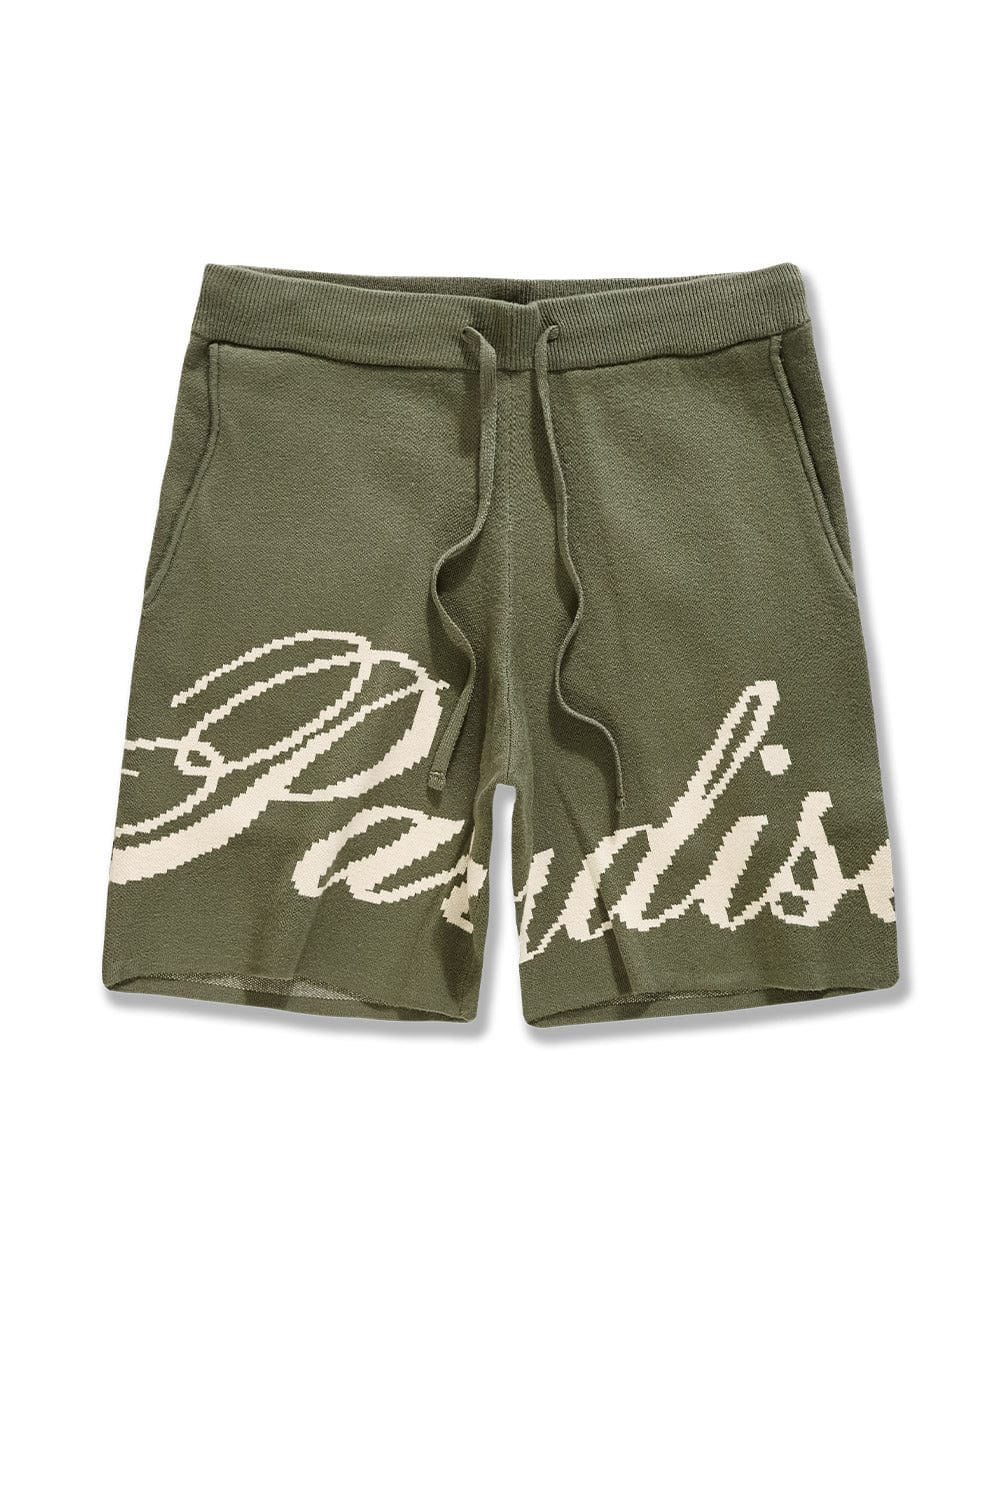 Jordan Craig Retro - Paradise Knit Shorts (Olive)